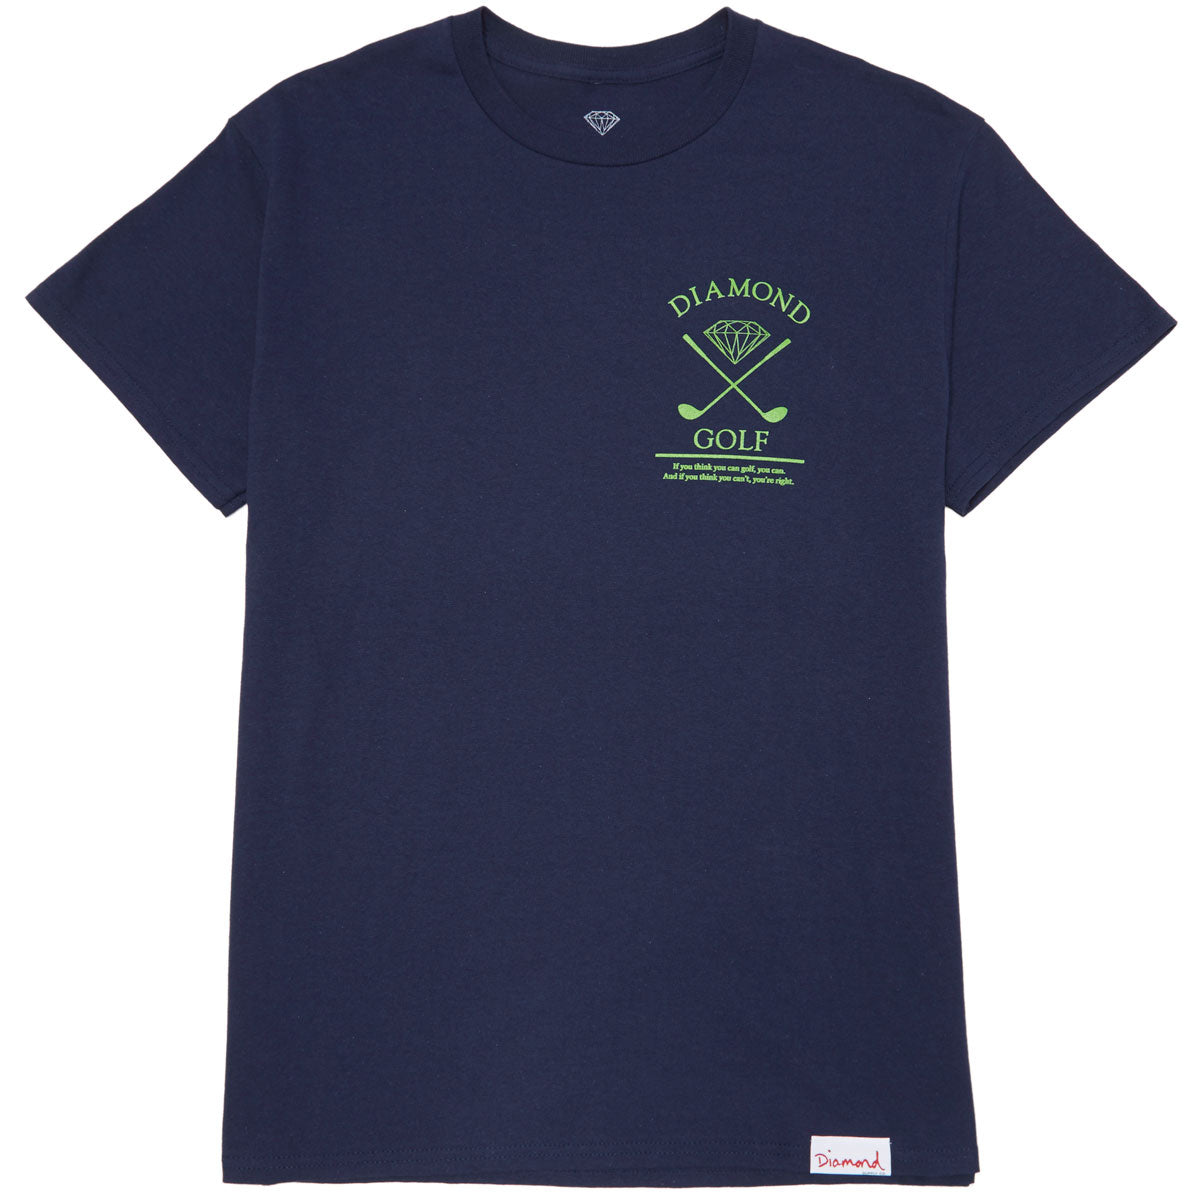 Diamond Supply Co. Golf T-Shirt - Navy image 2